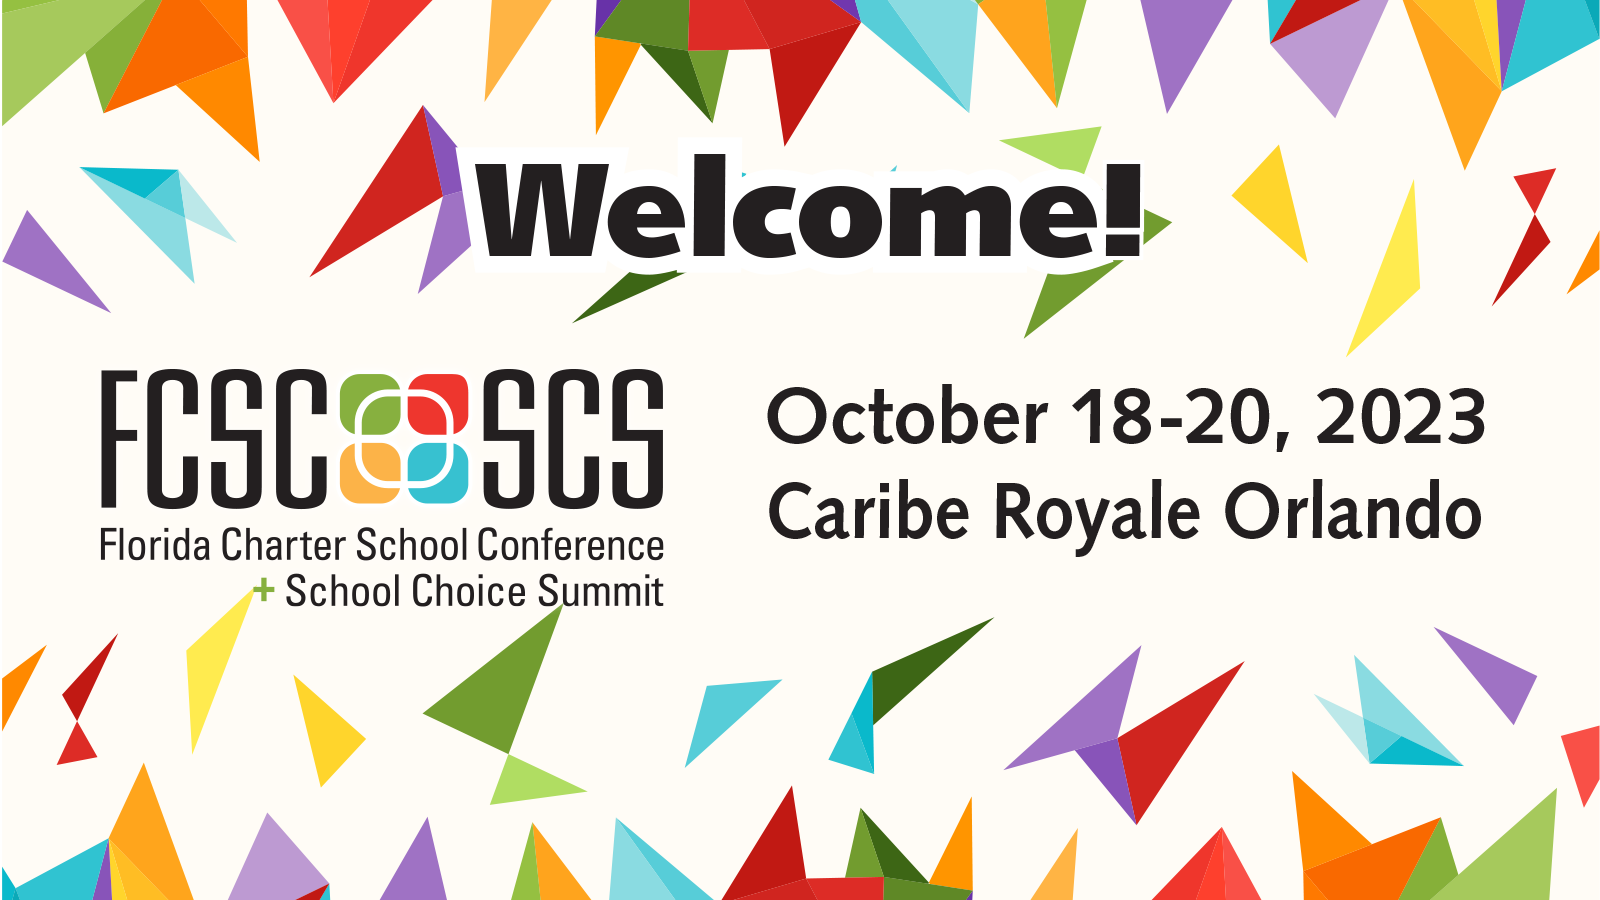 Florida Charter School Conference - October 18-20, 2023 - Caribe Royale Orlando 